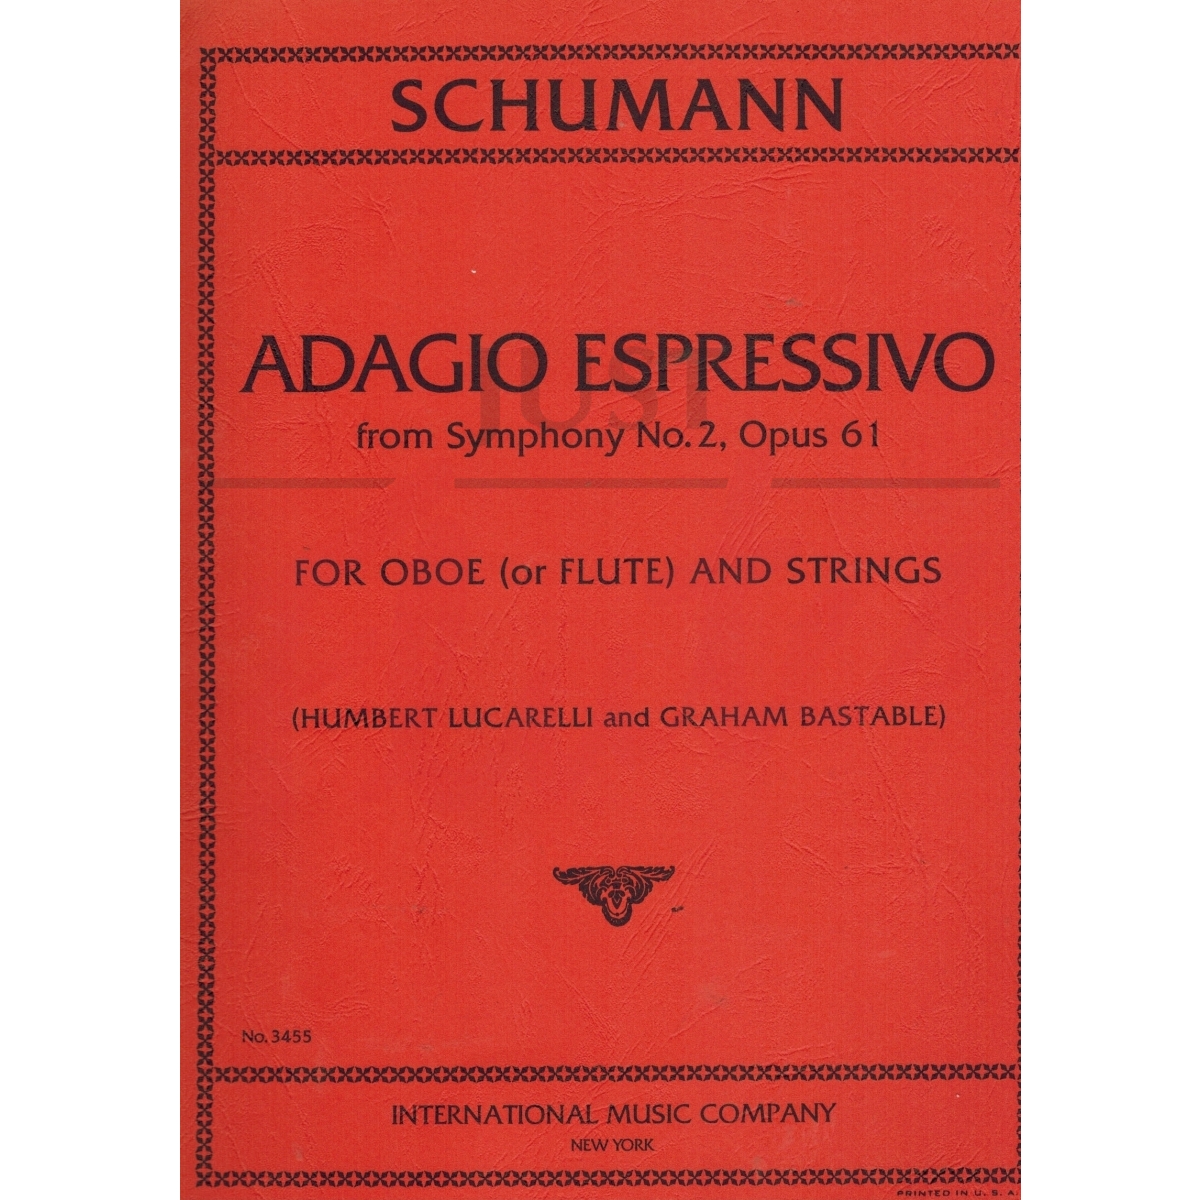 Adagio Espressivo from Symphony No 2